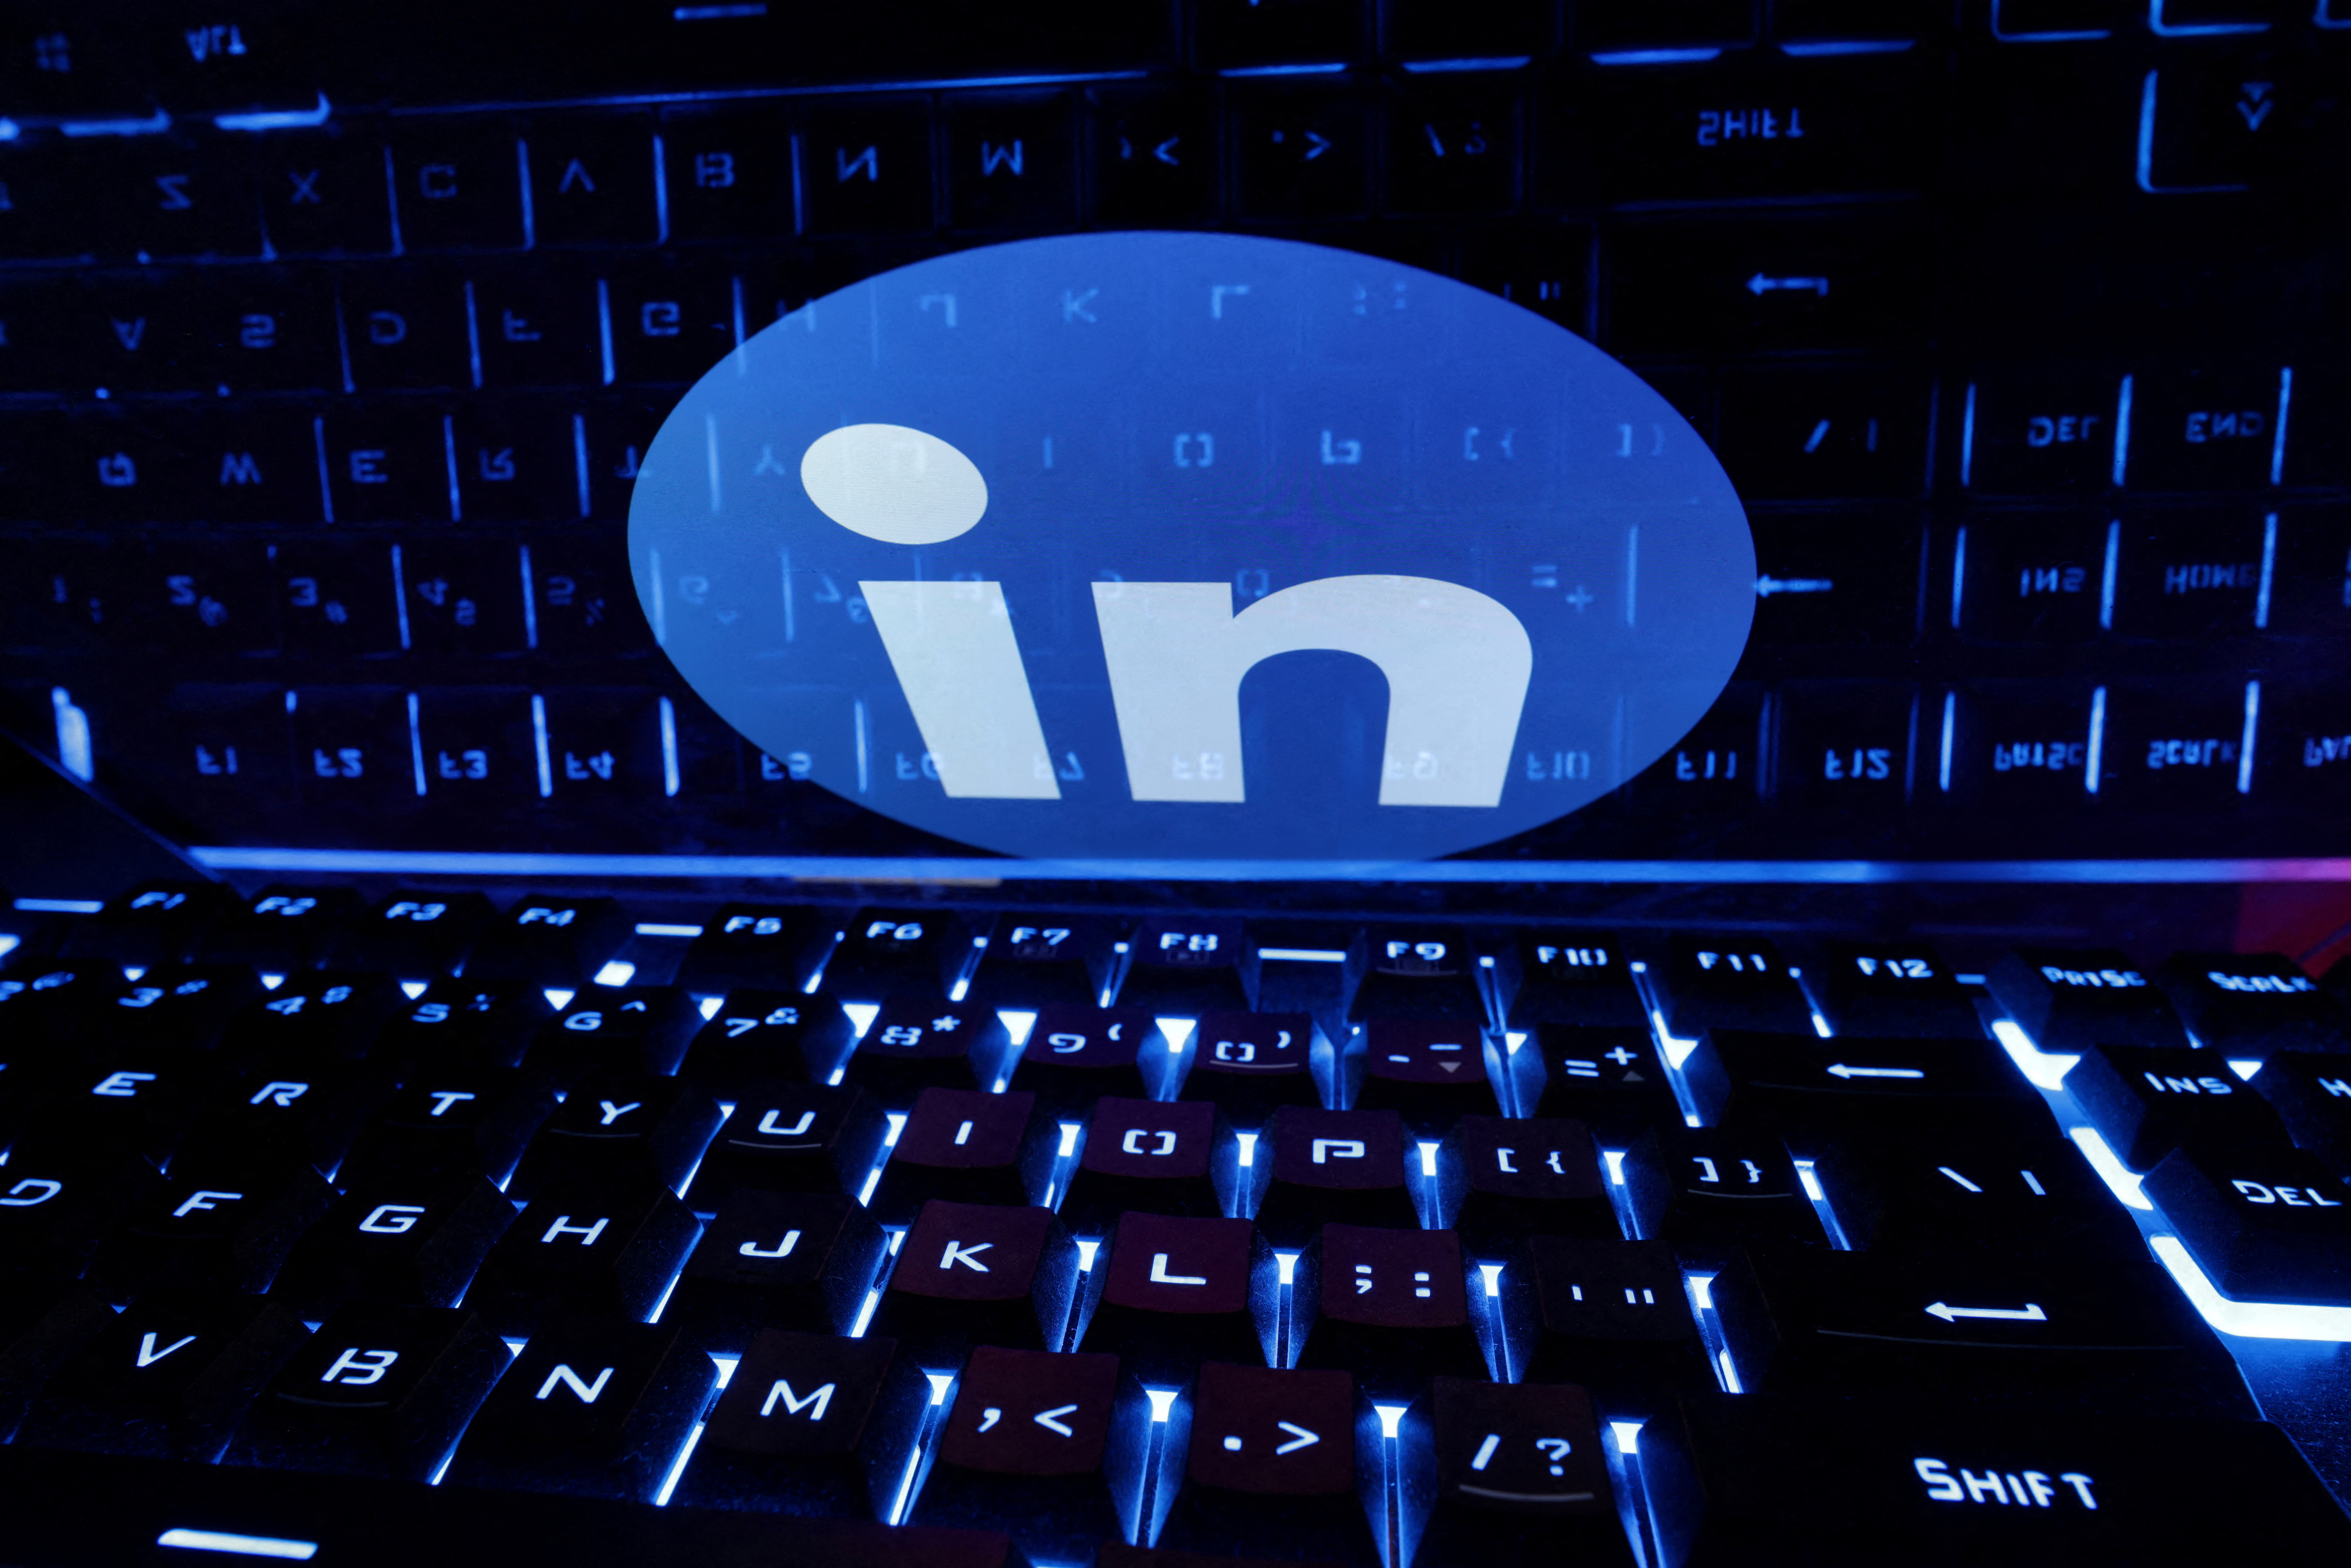 Illustration shows LinkedIn logo